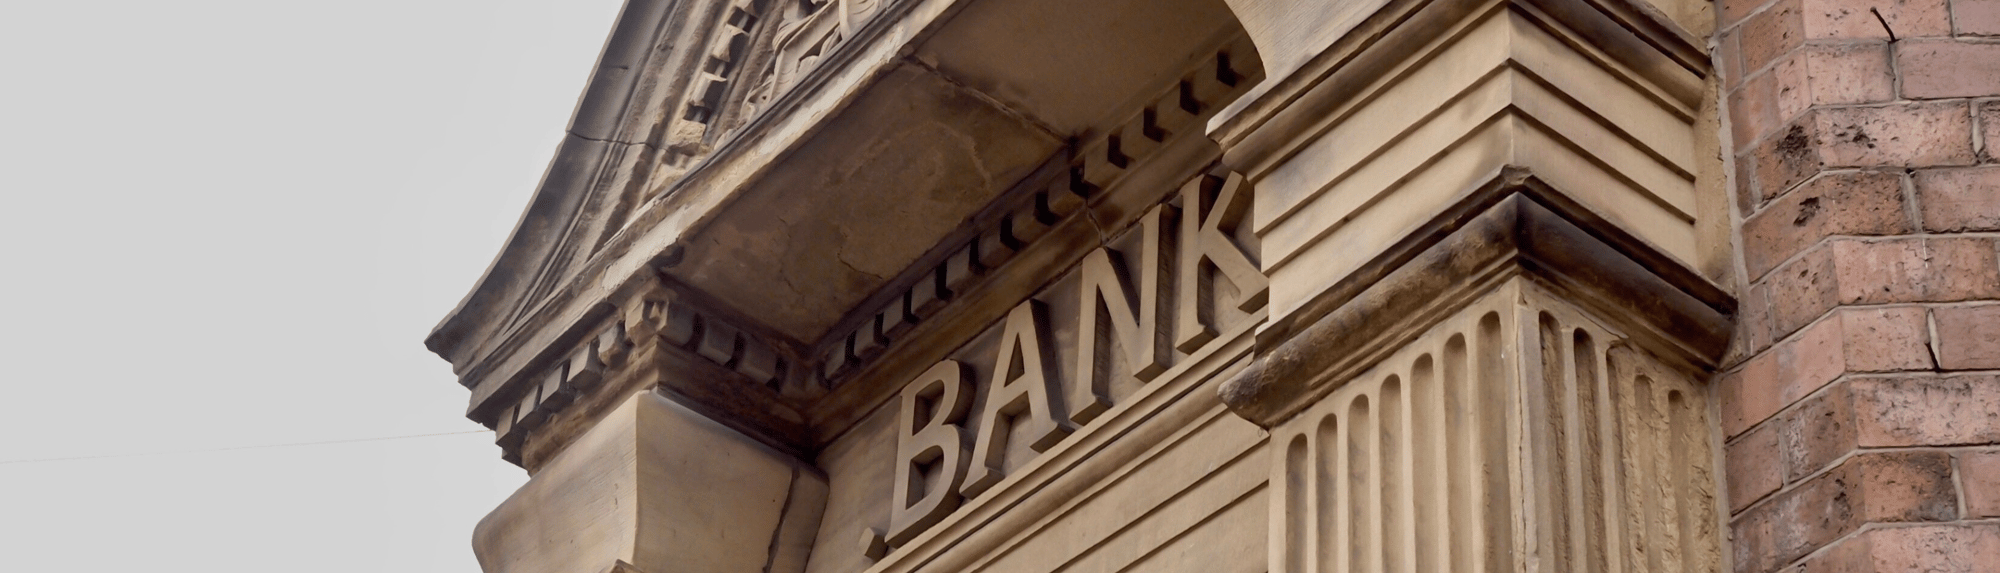 Leading global bank-banner